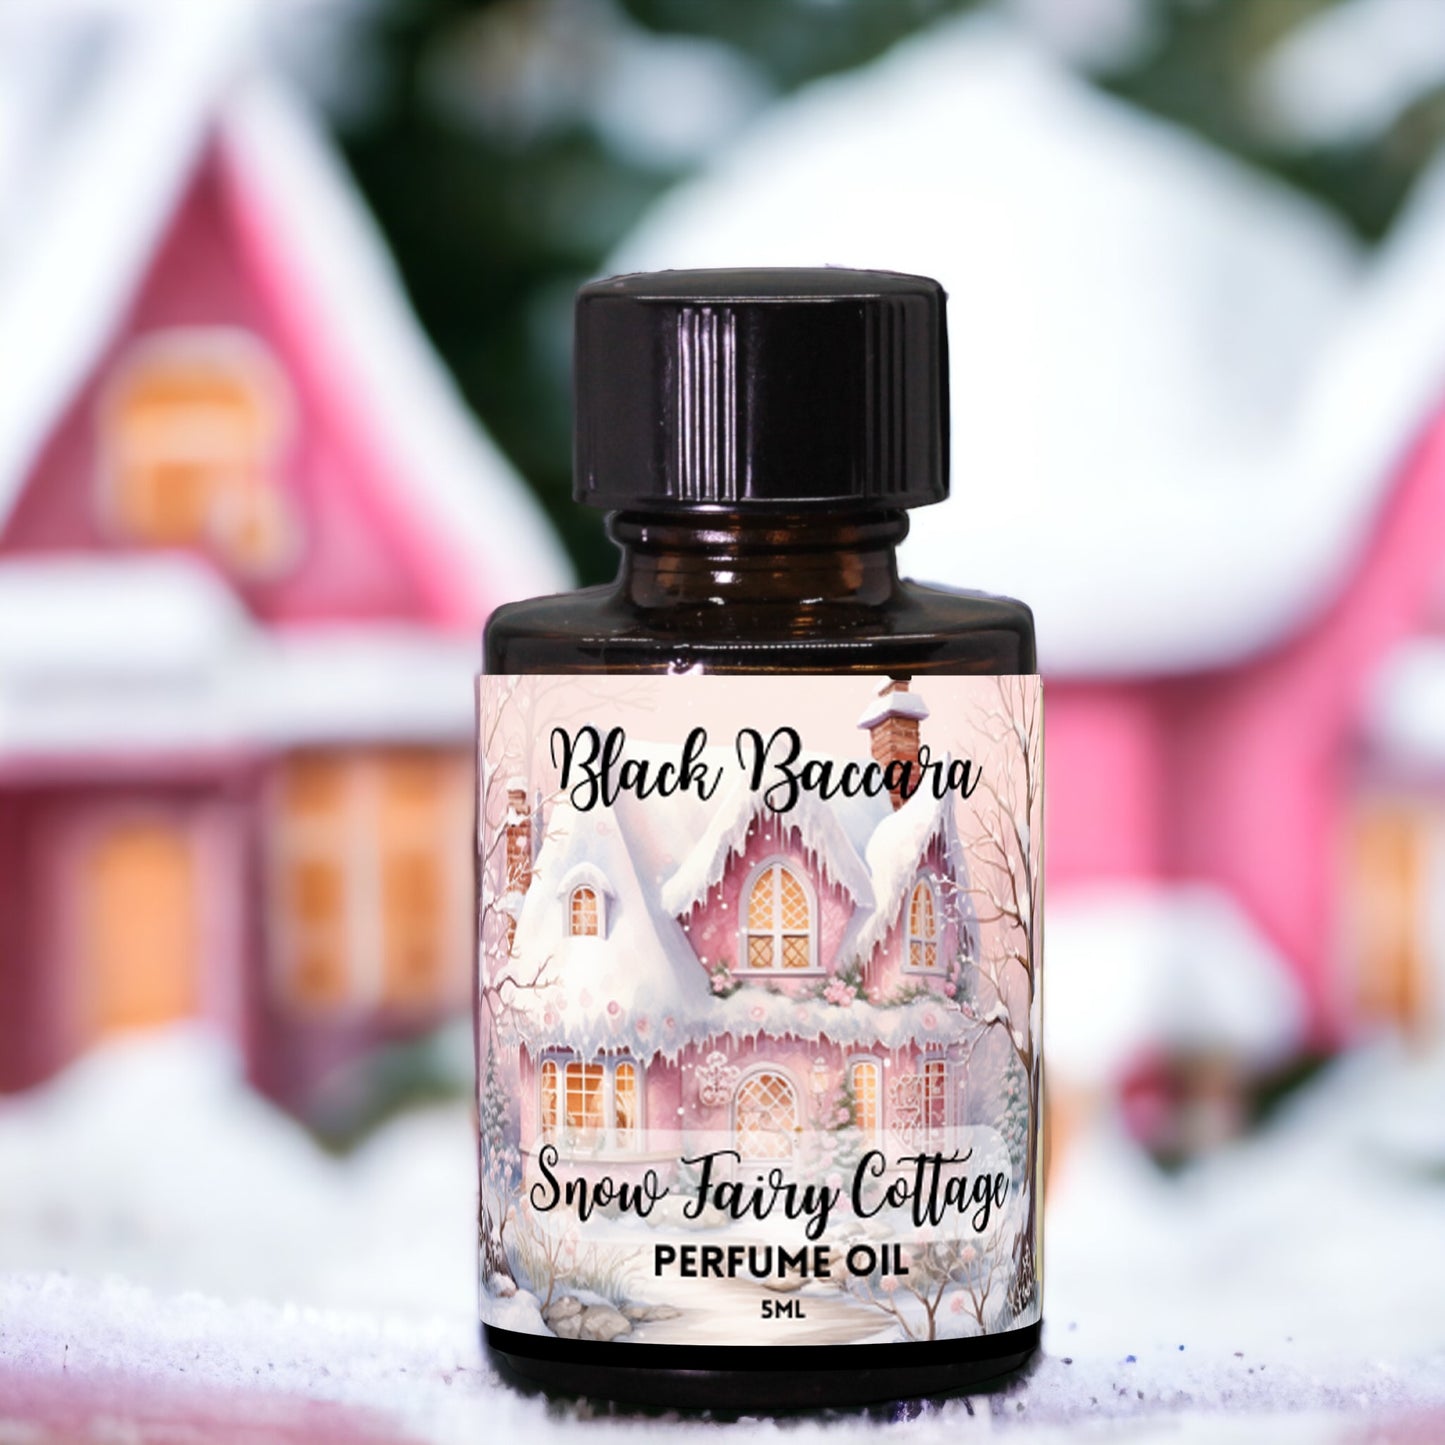 Snow Fairy Cottage Perfume Oil